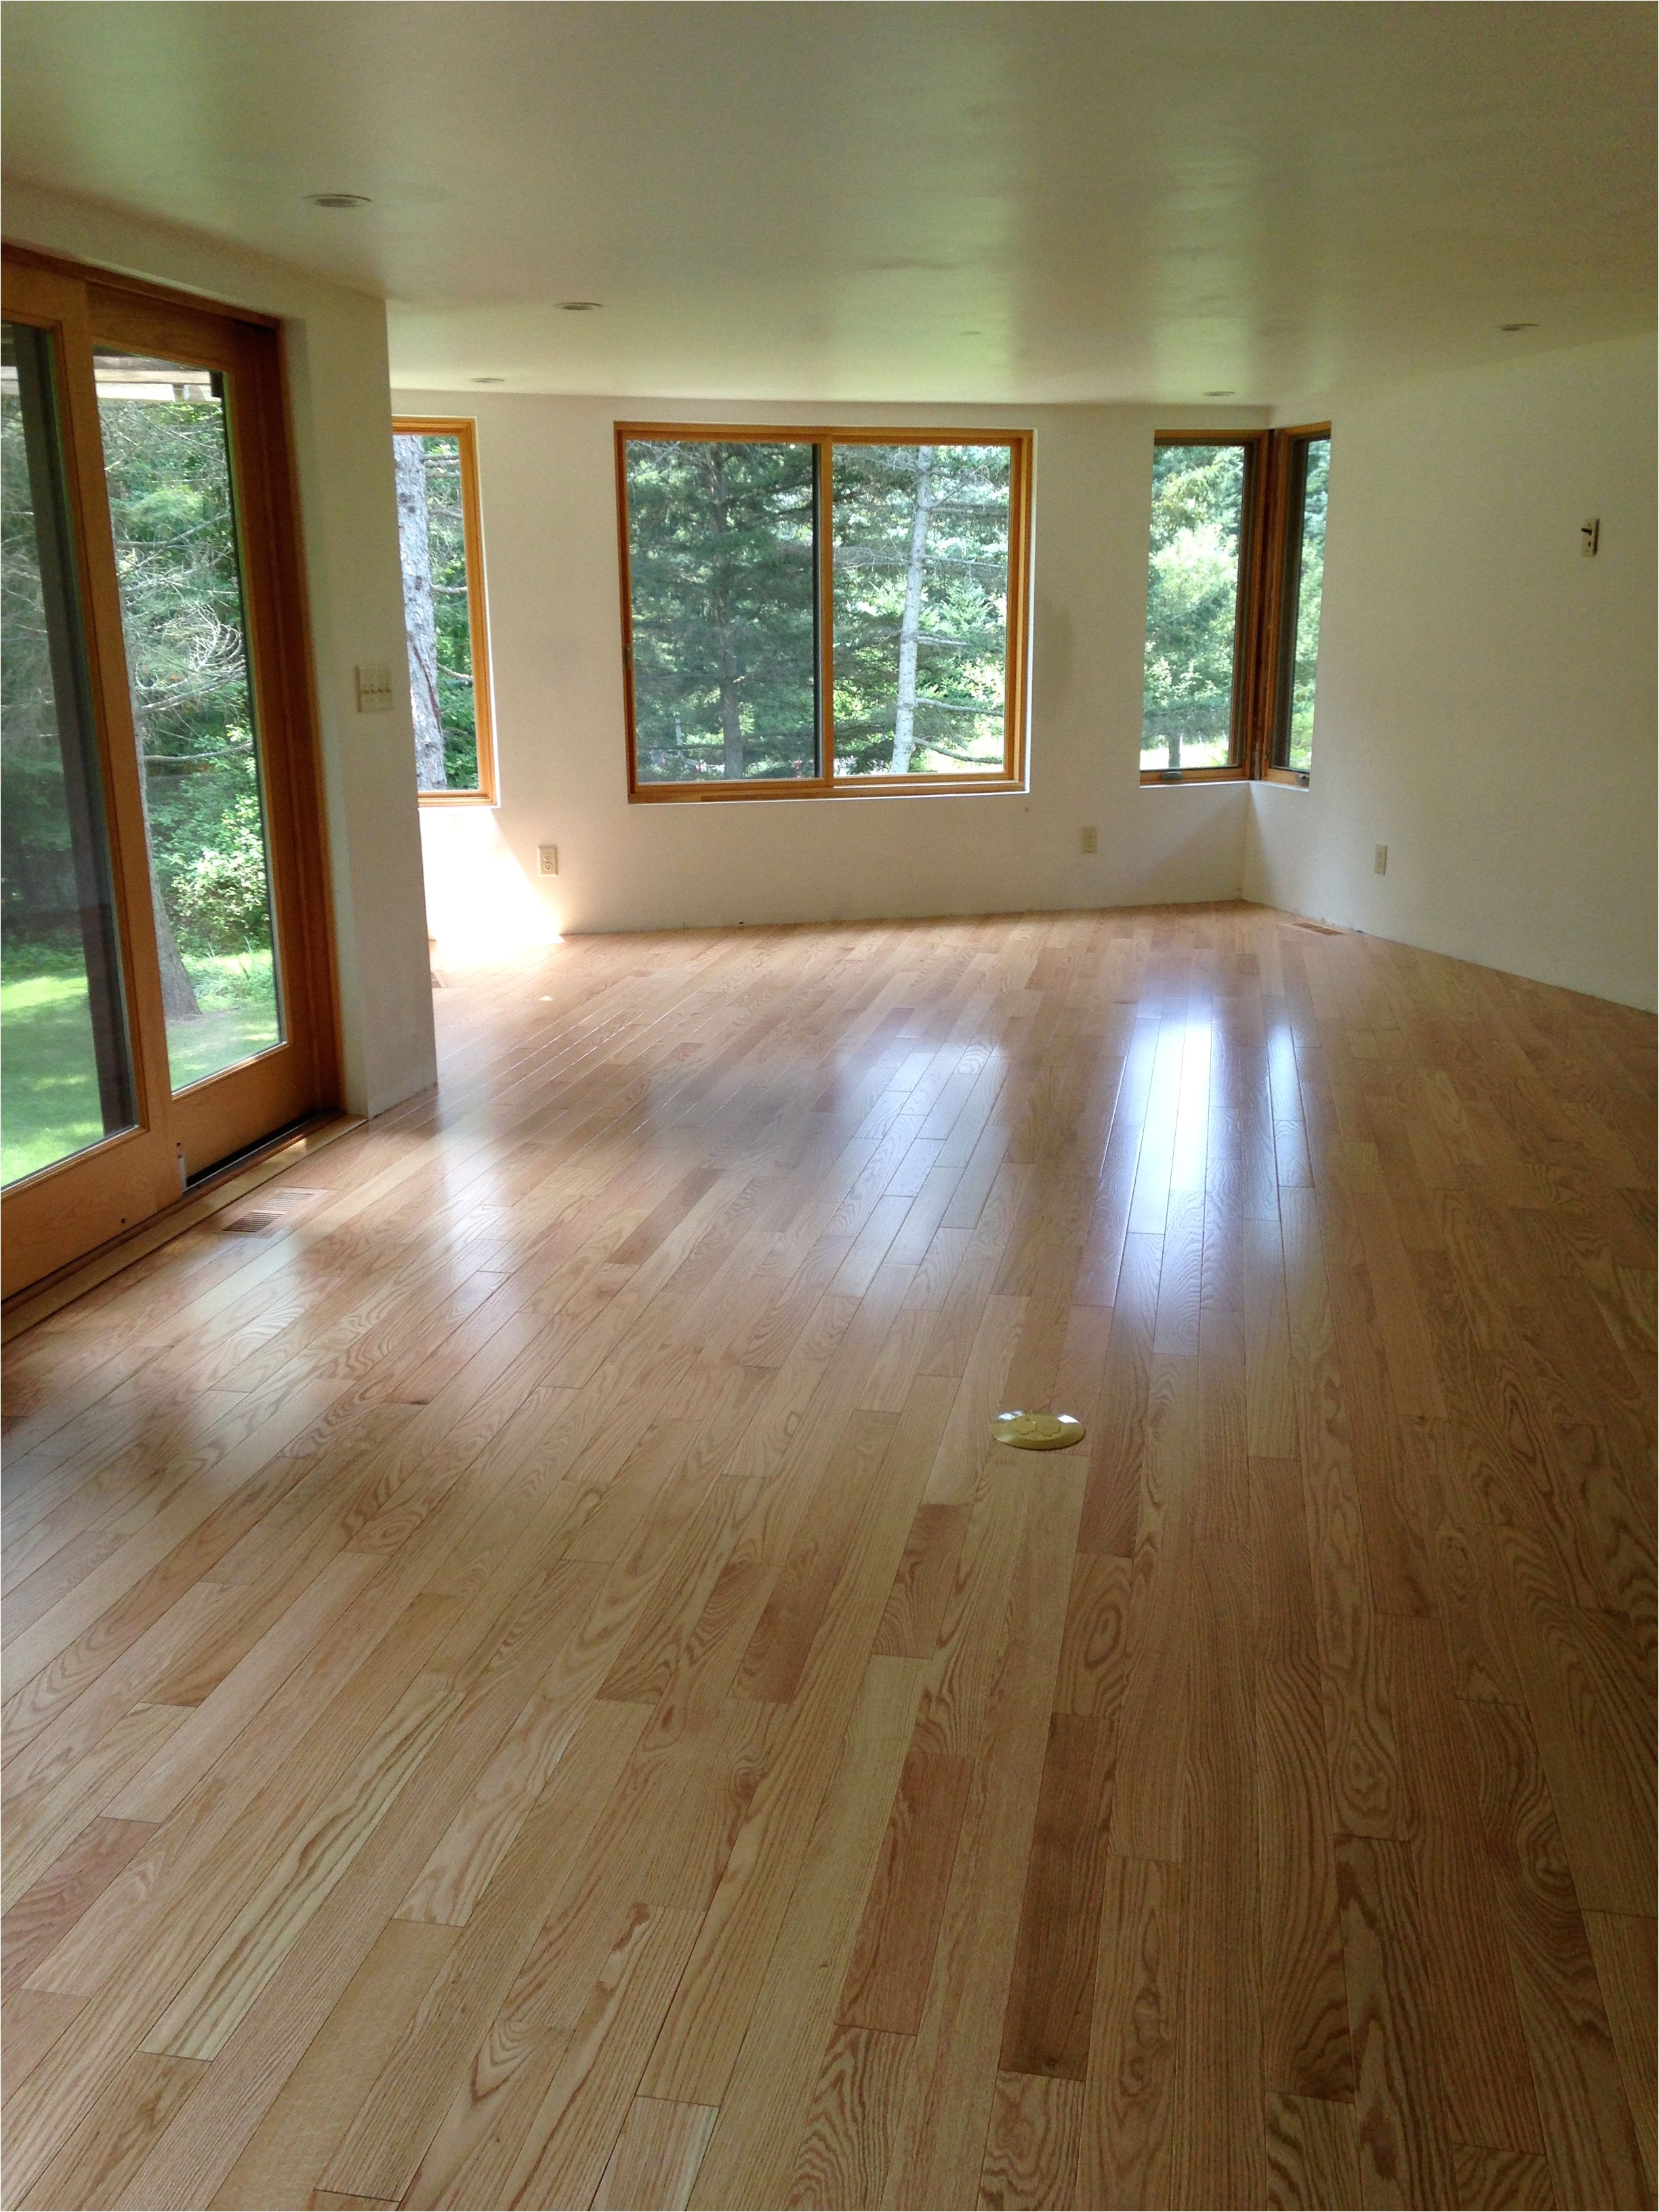 Bellawood Hardwood Floor Cleaner Uk Great Methods to Use for Refinishing Hardwood Floors Pinterest